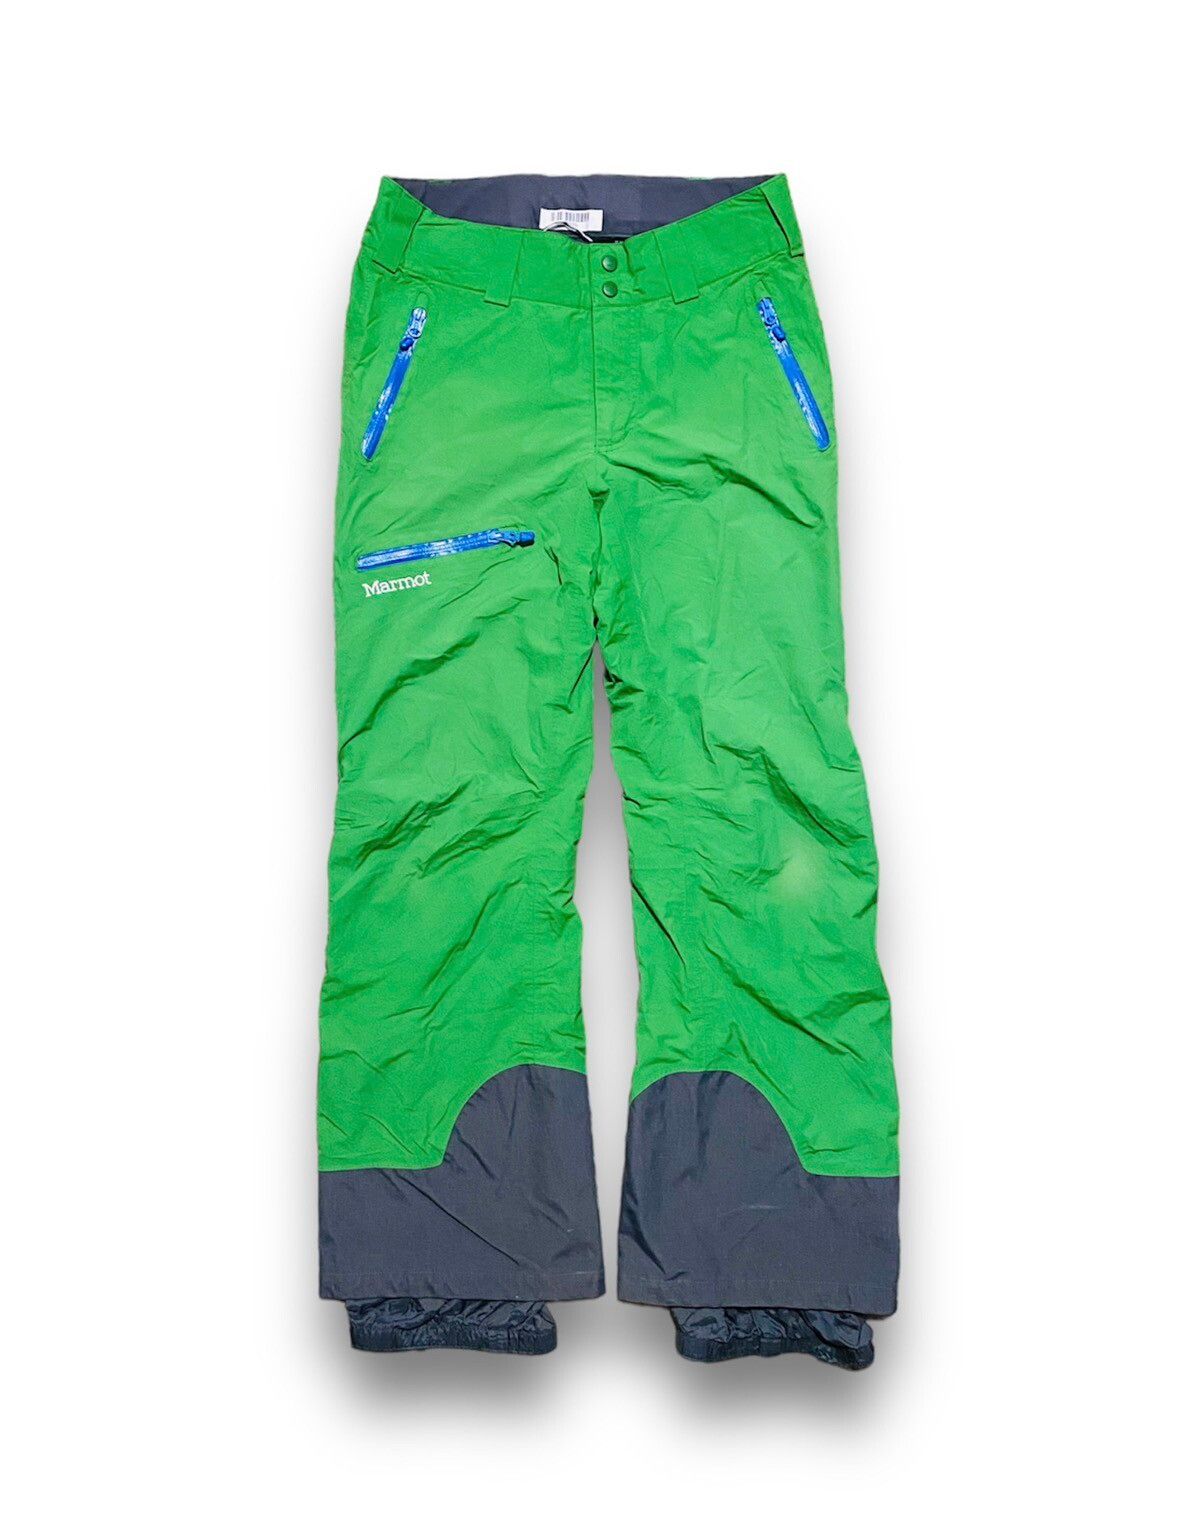 Marmot GTX Pants Trousers Skiing Hiking Outdoor Green Men L - 4